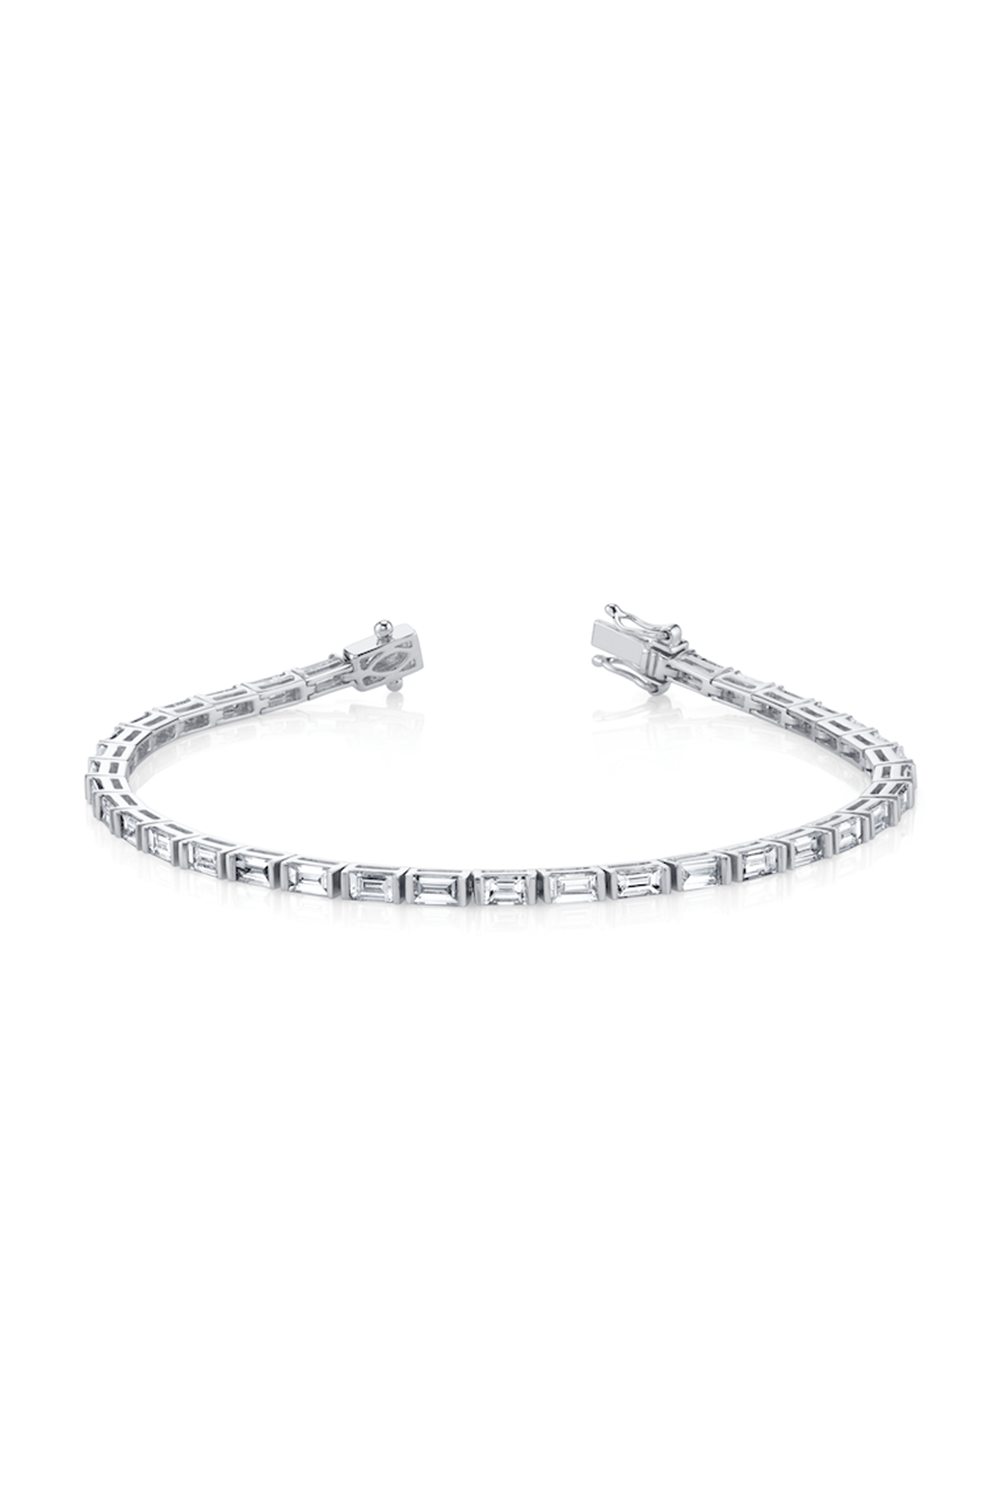 ANITA KO-Baguette Diamond Bracelet-WHITE GOLD